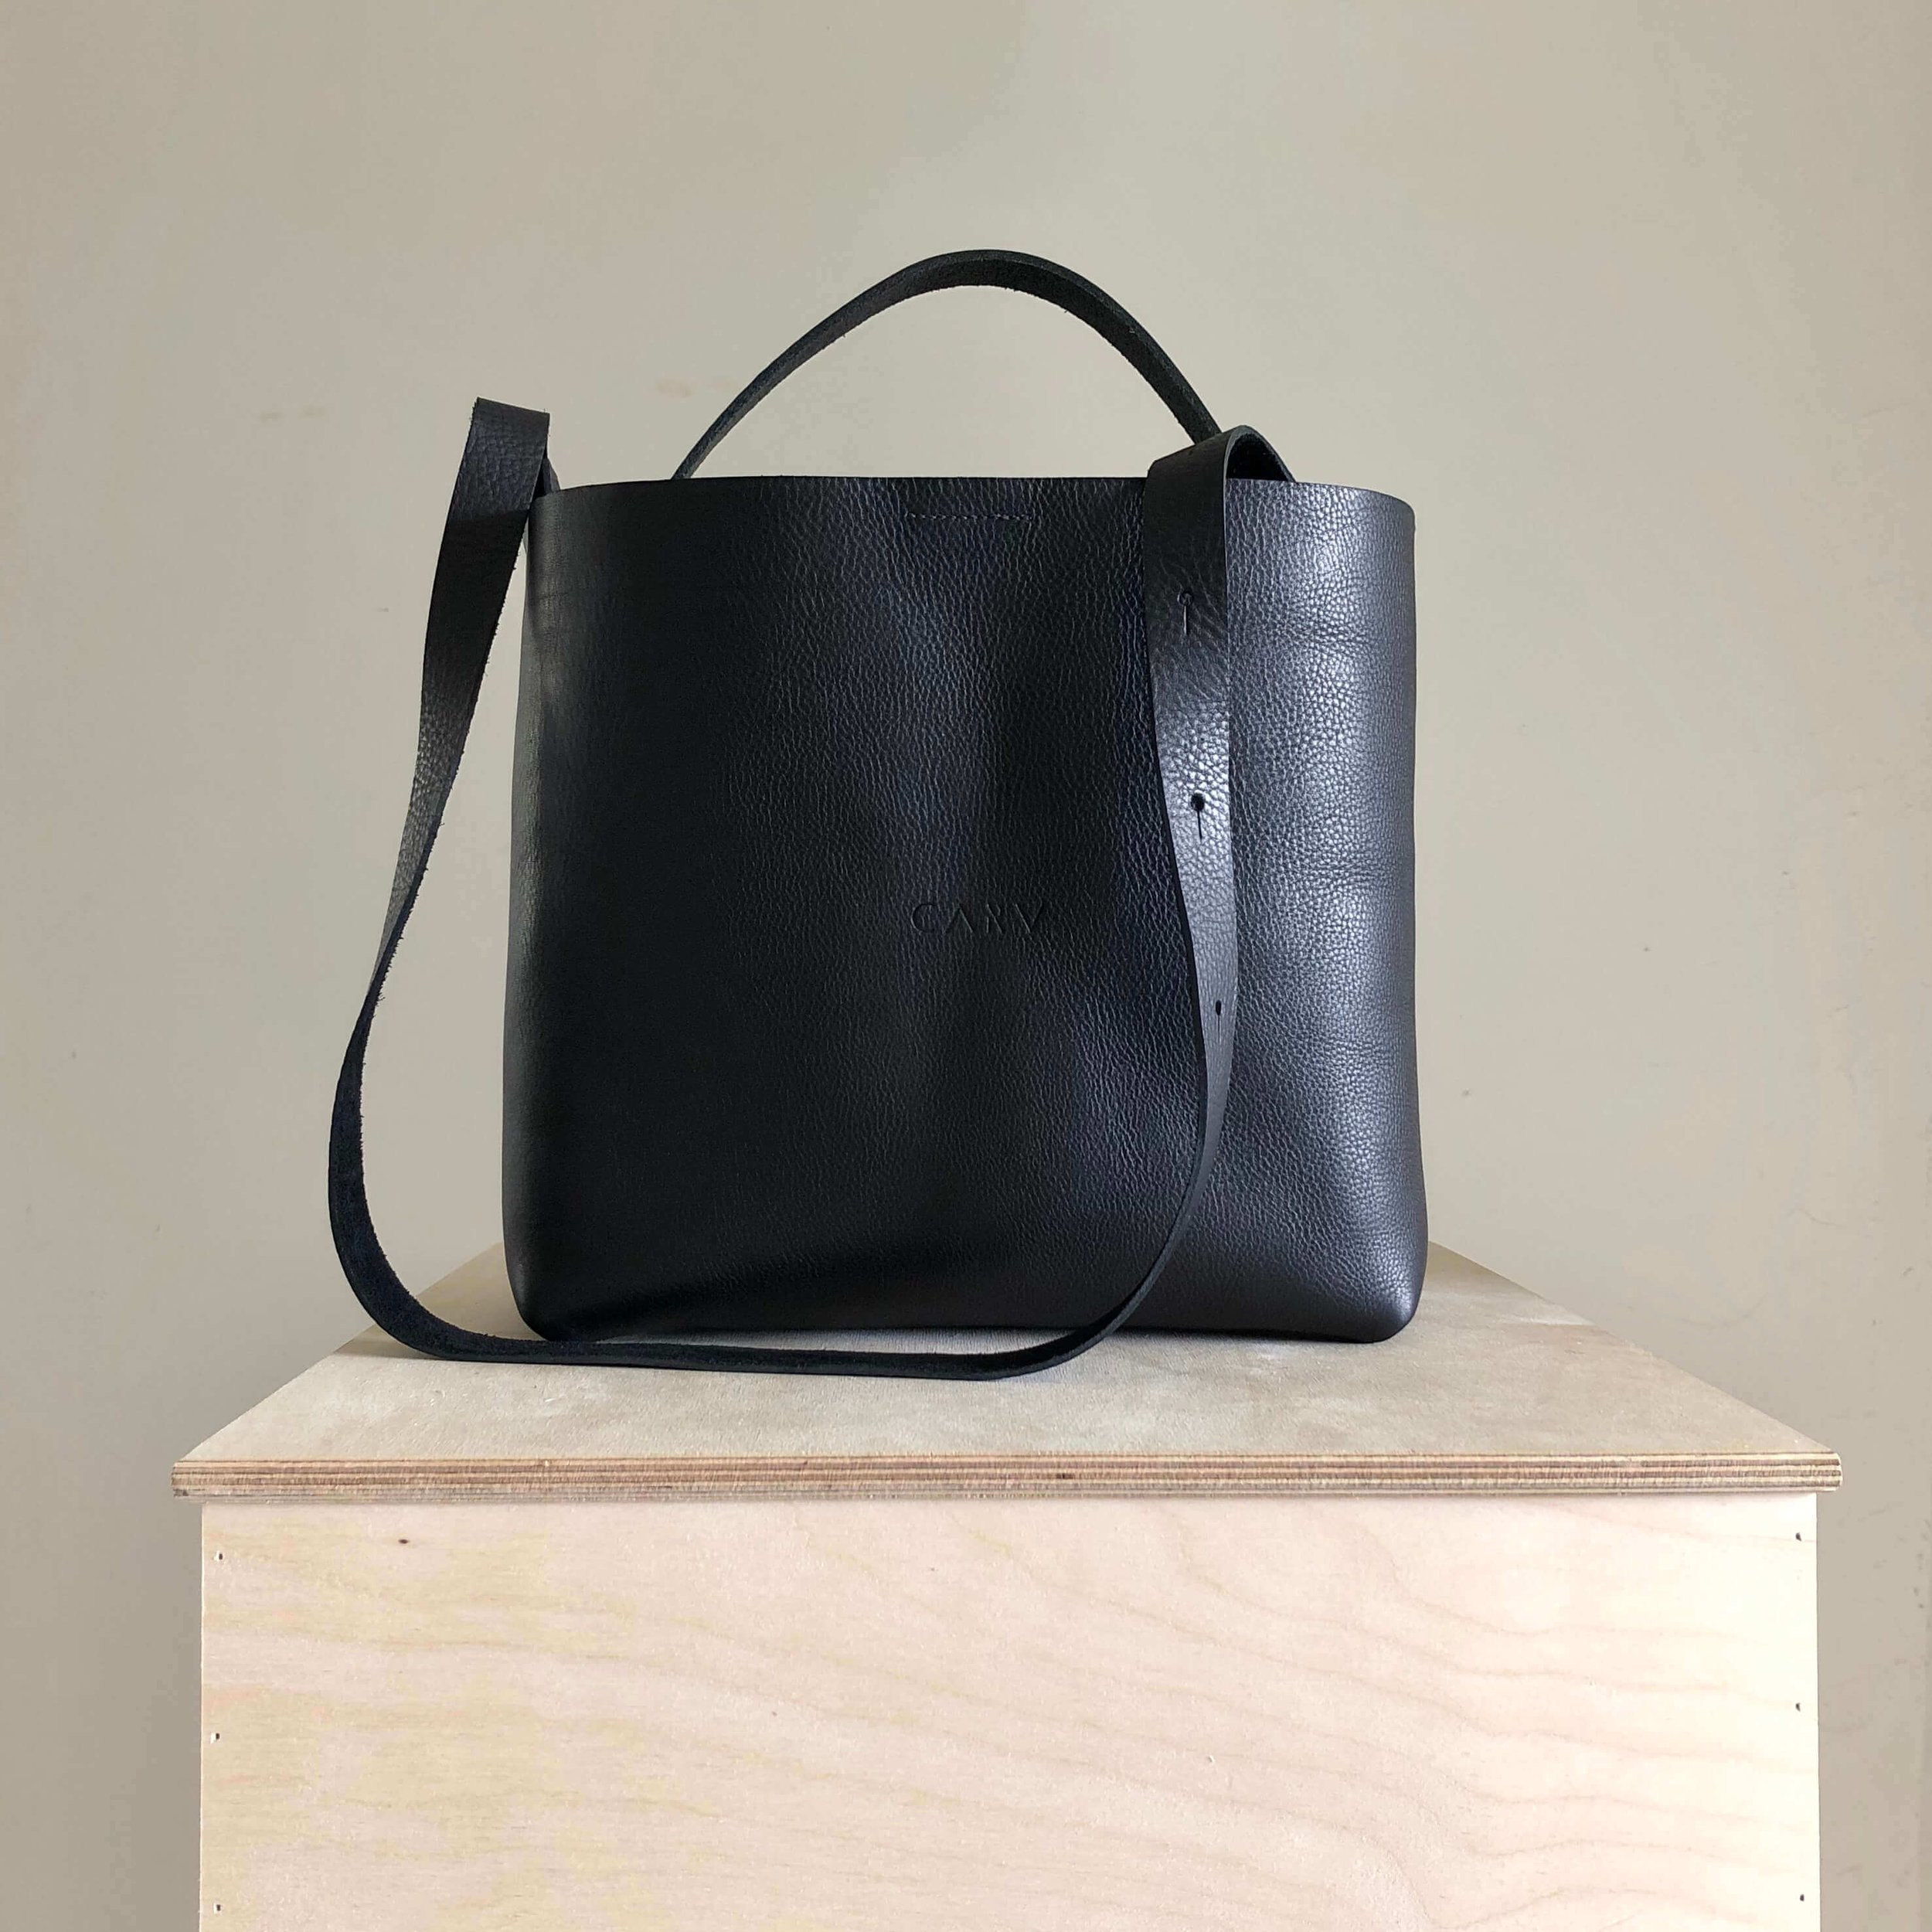 CARV sustainable leather shopper bag handmade in the UK.